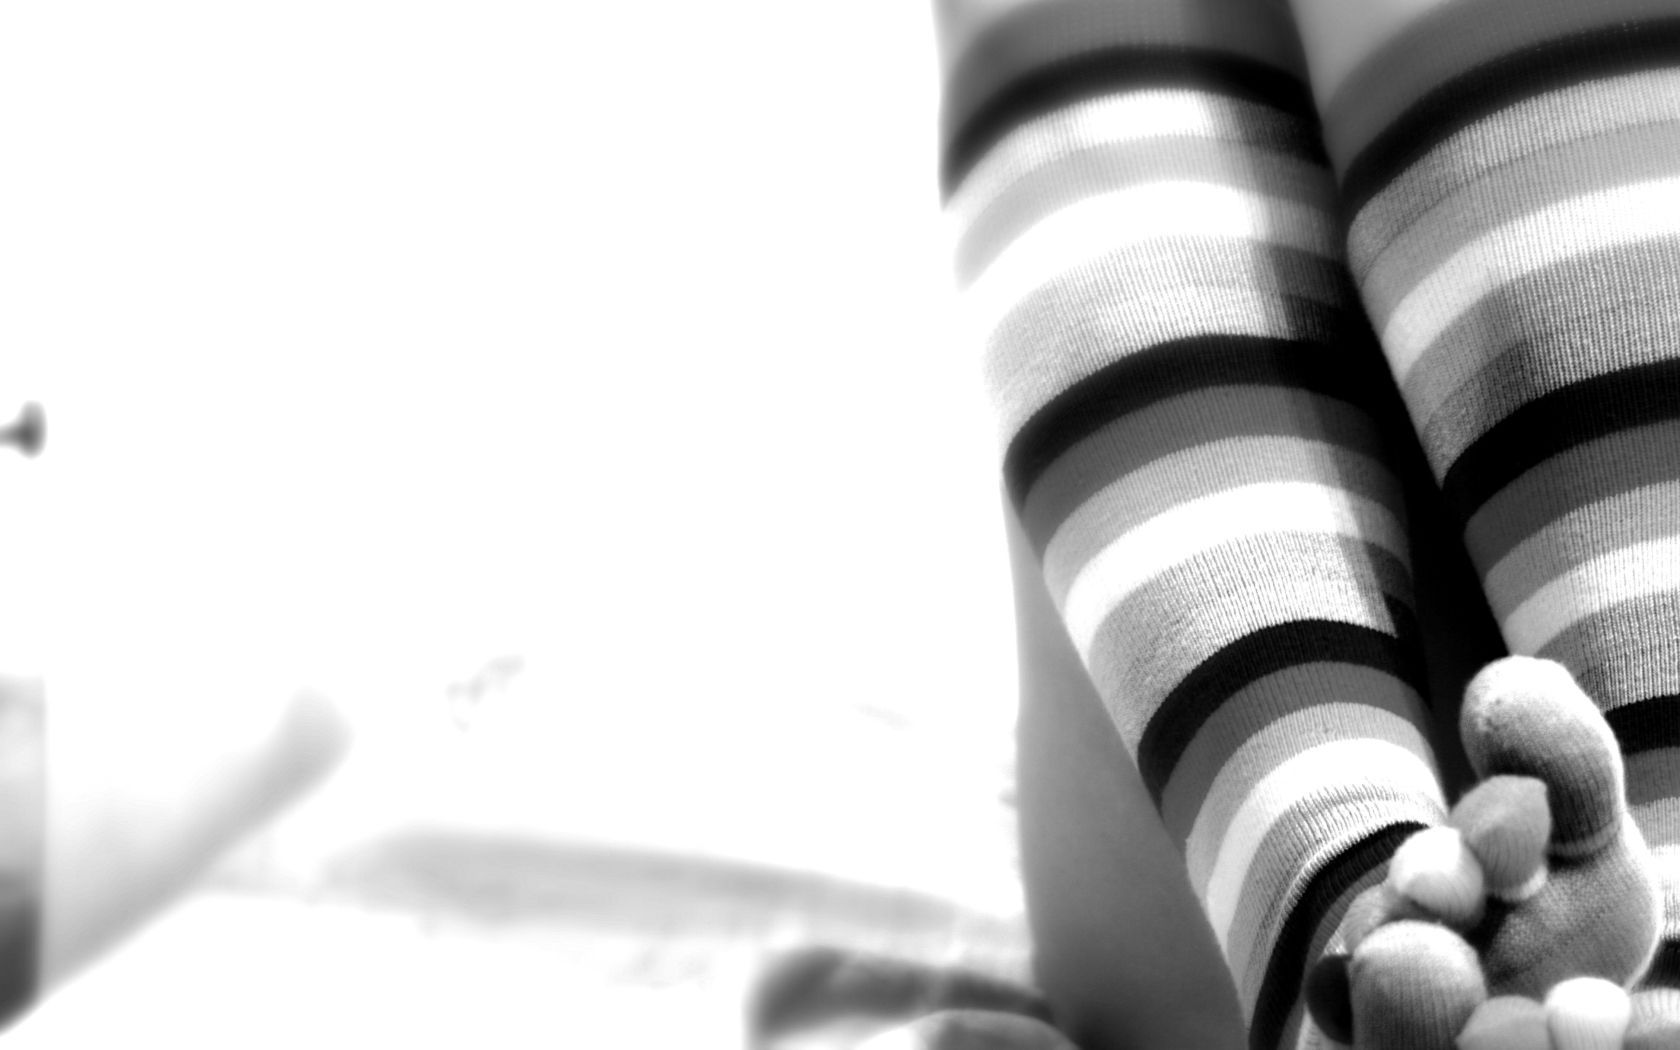 Feet grayscale monochrome socks striped clothing wallpaper